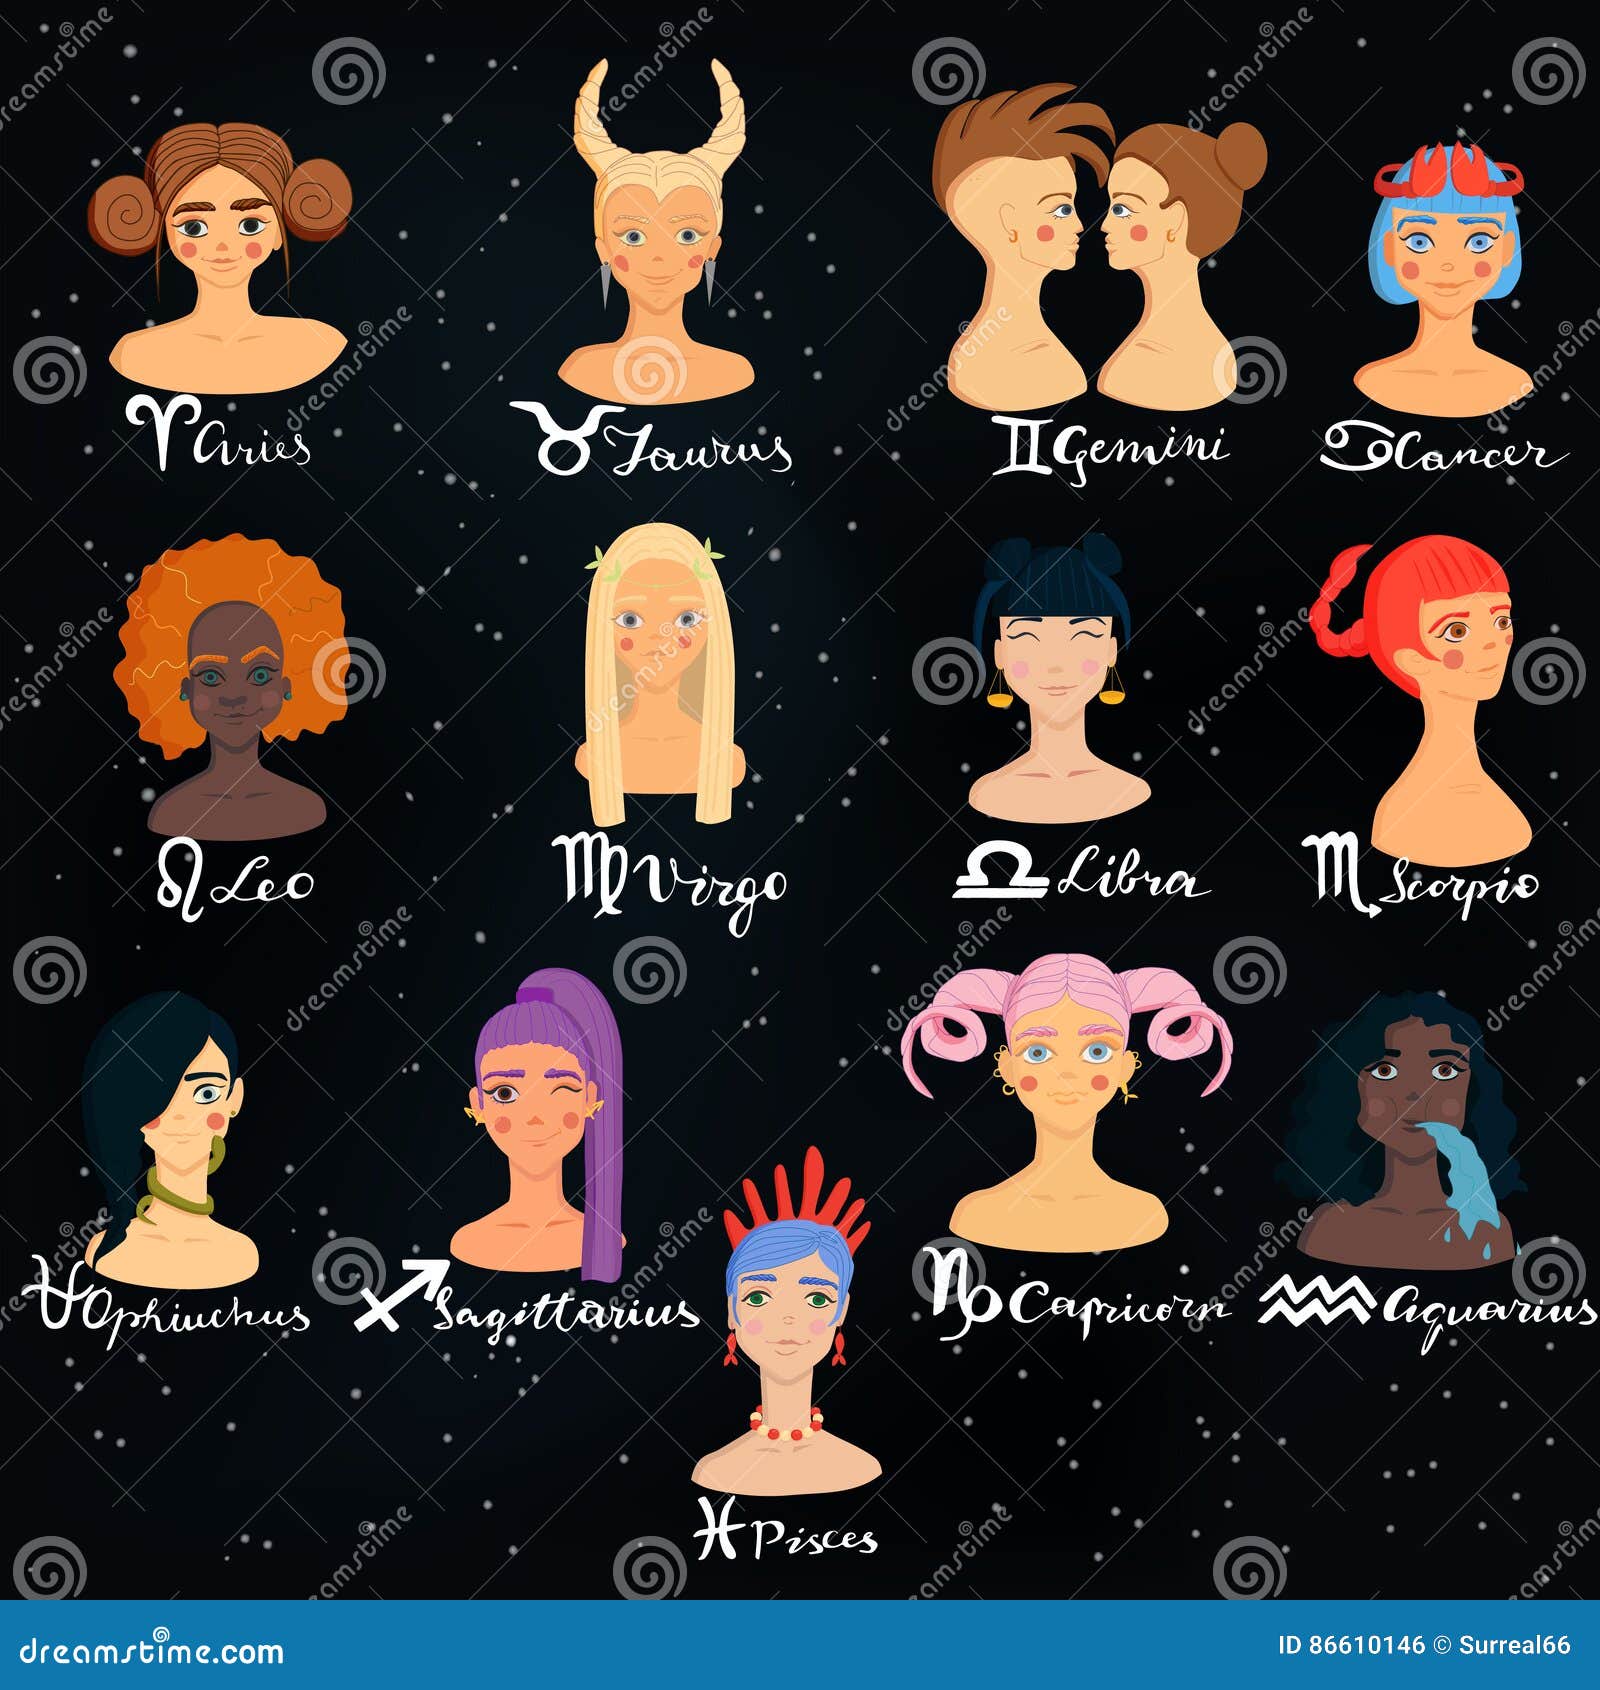 Hair Horoscopes - Zodiac Sign Hairstyles | MyPandit